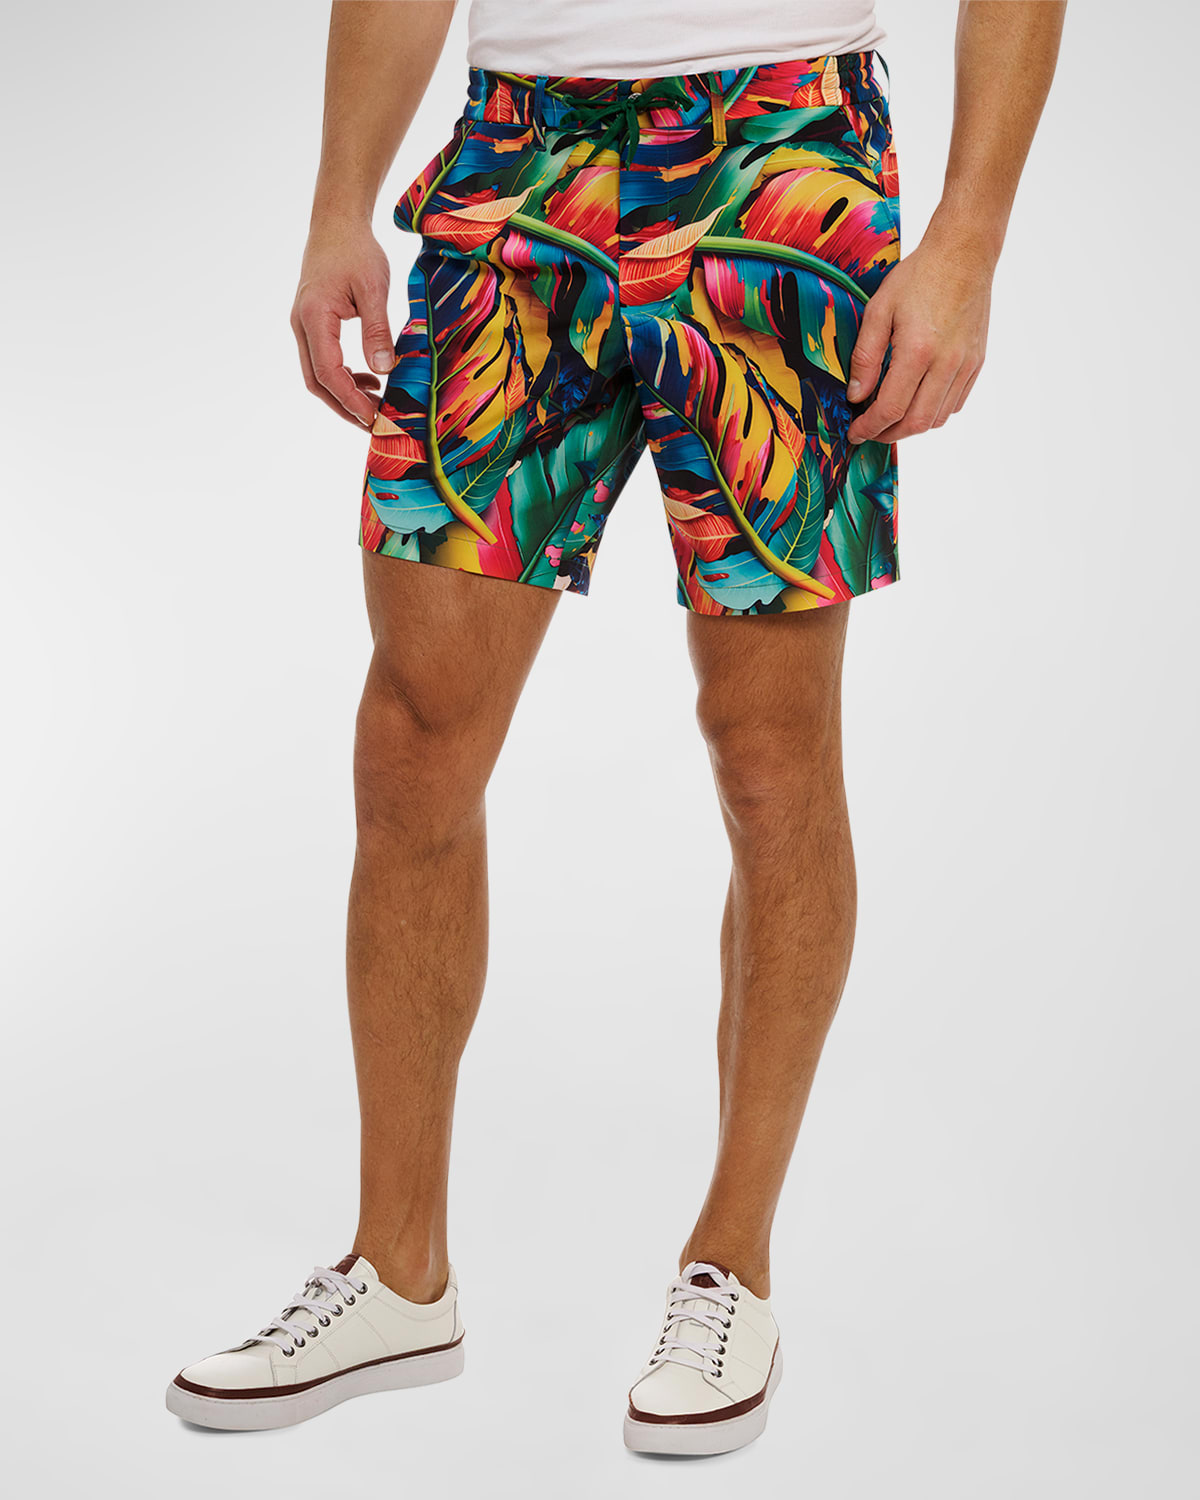 Men's Toucan Woven Drawstring Shorts